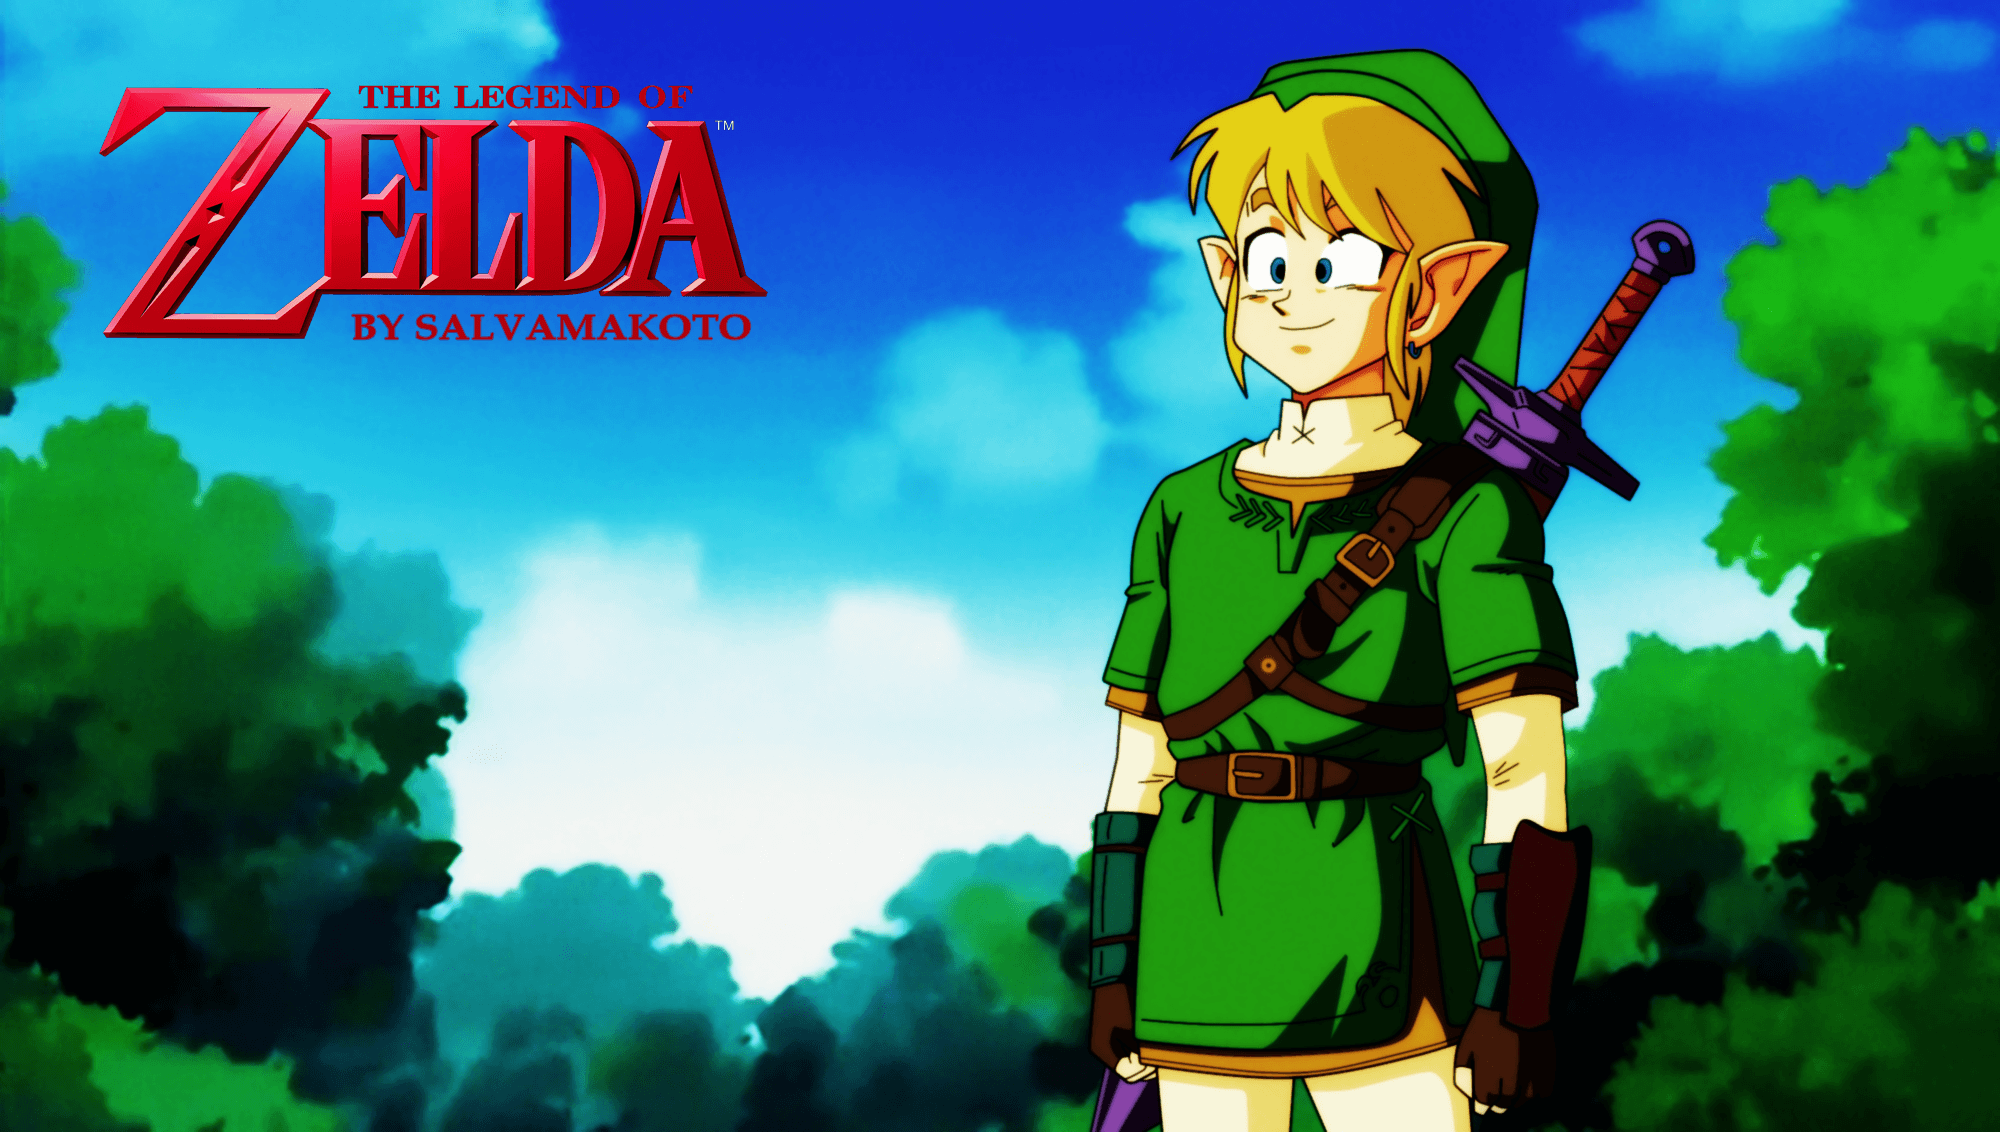 Link DBZ Style Anime Crossover Crossover, the Legend Of Zelda, link